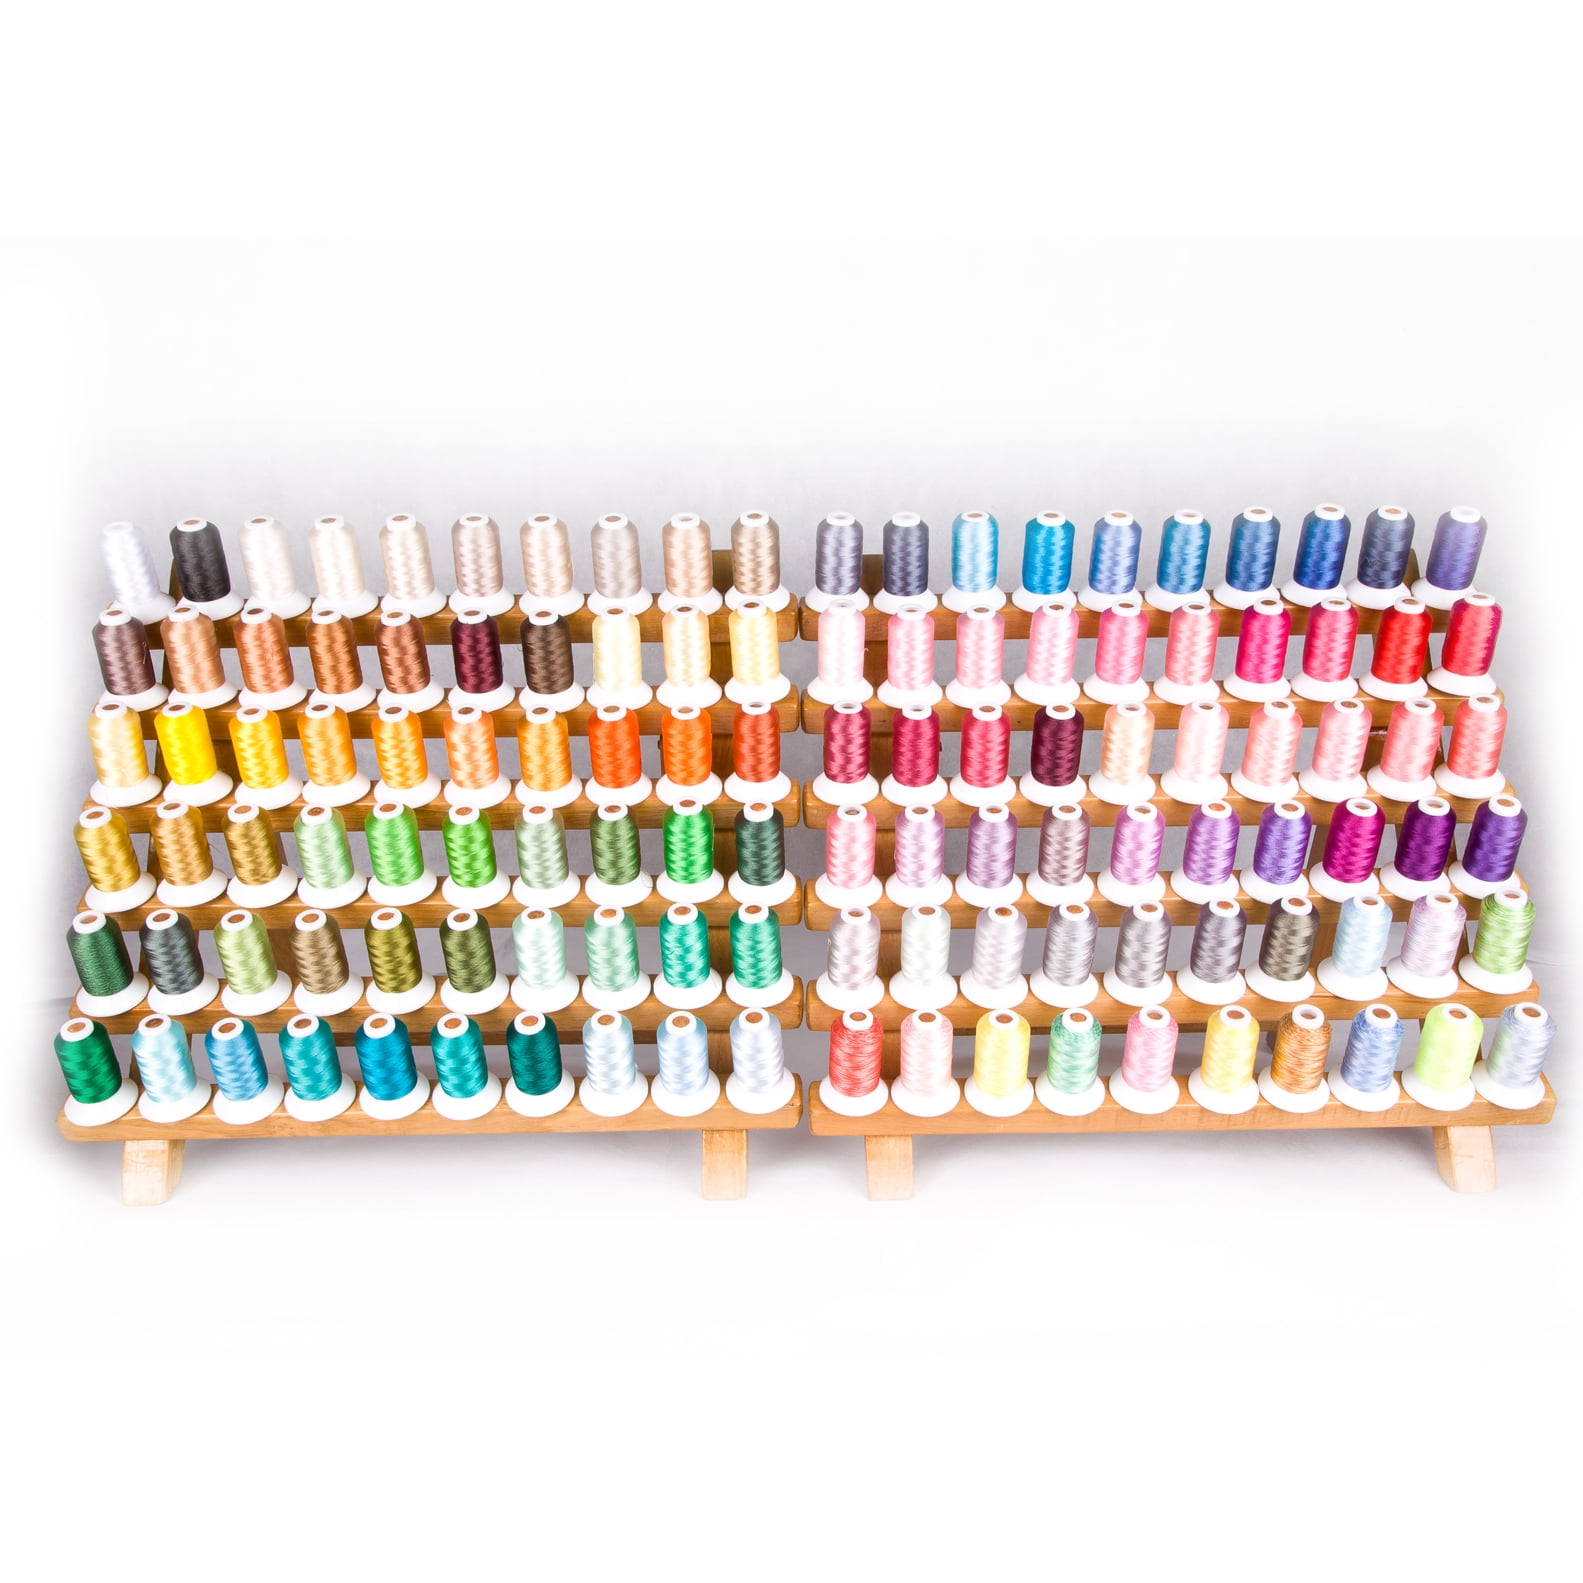 simthread Simthread 32 Madeira Colors Polyester Embroidery Machine Thread  Kit 500M (550Y) Similar to Madeira Robinson-Anton Color 